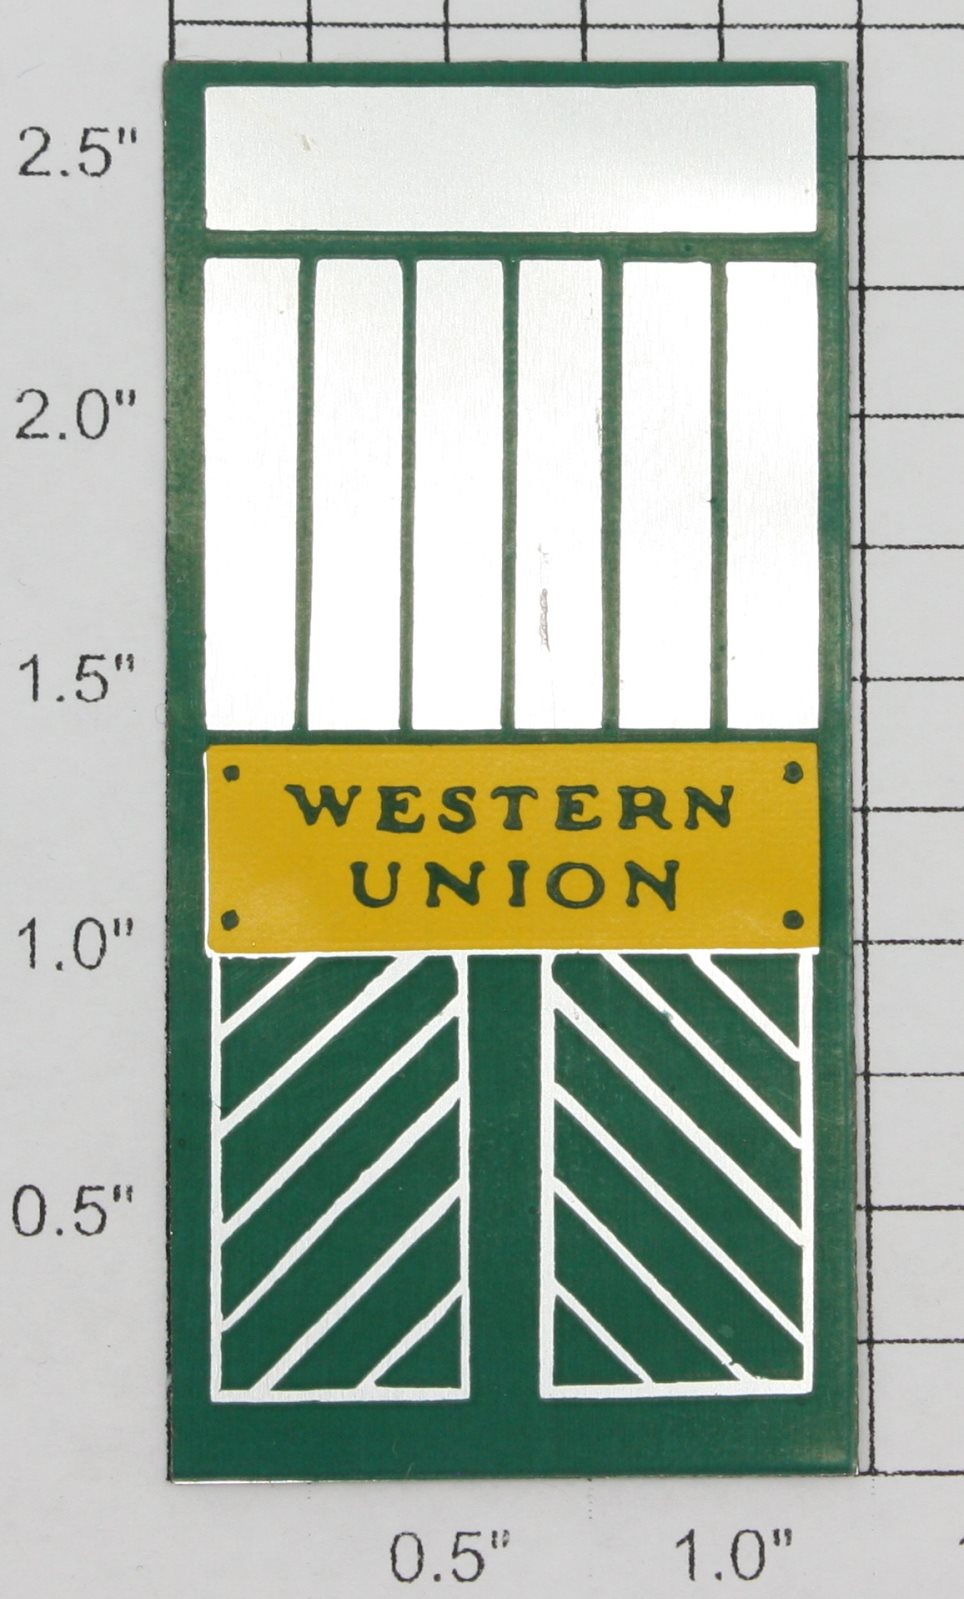 Noma 450-4 "Western Union" Light Green Door w/ Adhesive on Back